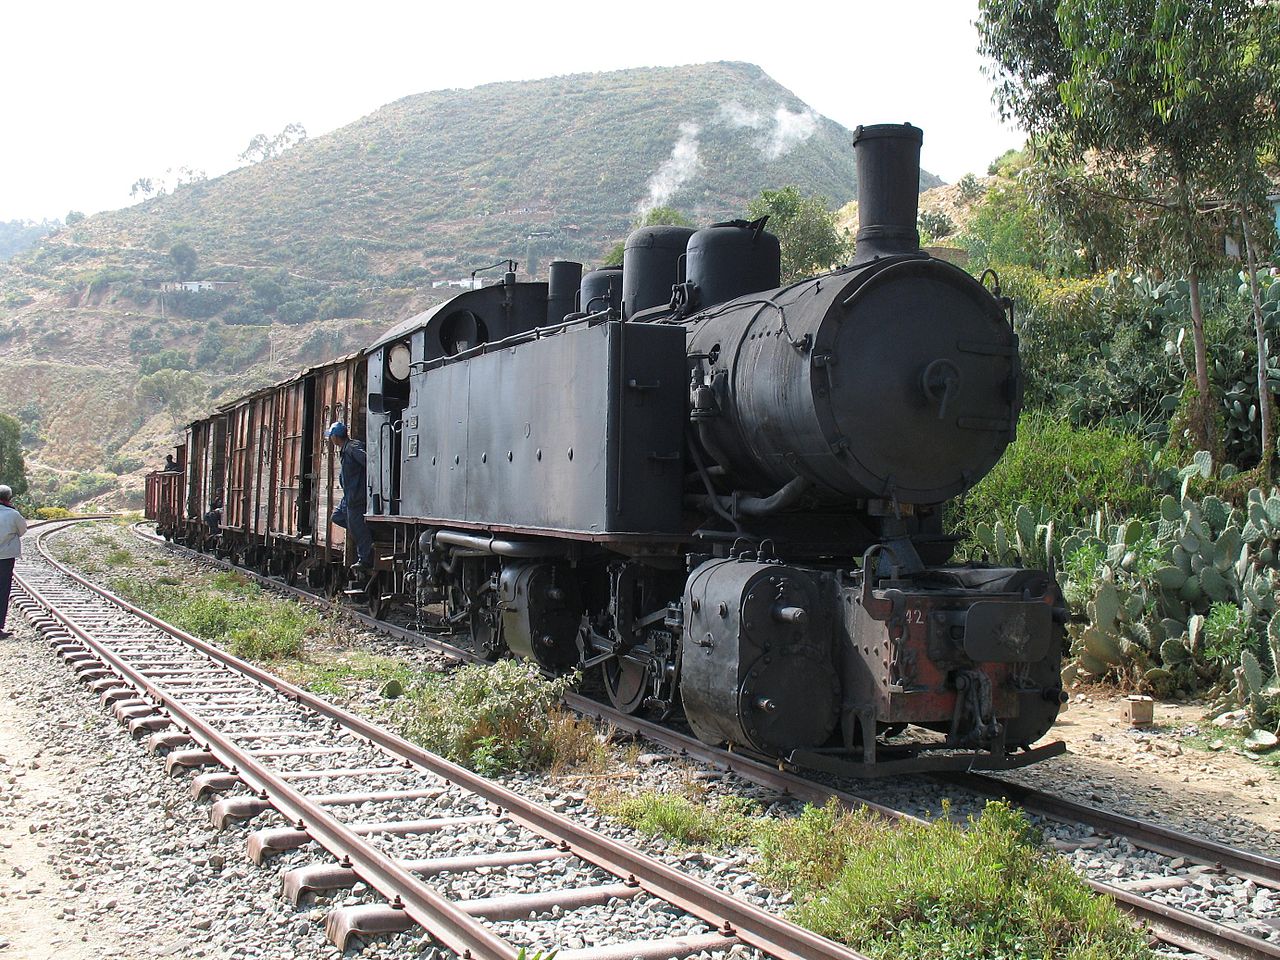 1280px-ansaldo_442_steam_locomotive_in_eritrea.JPG